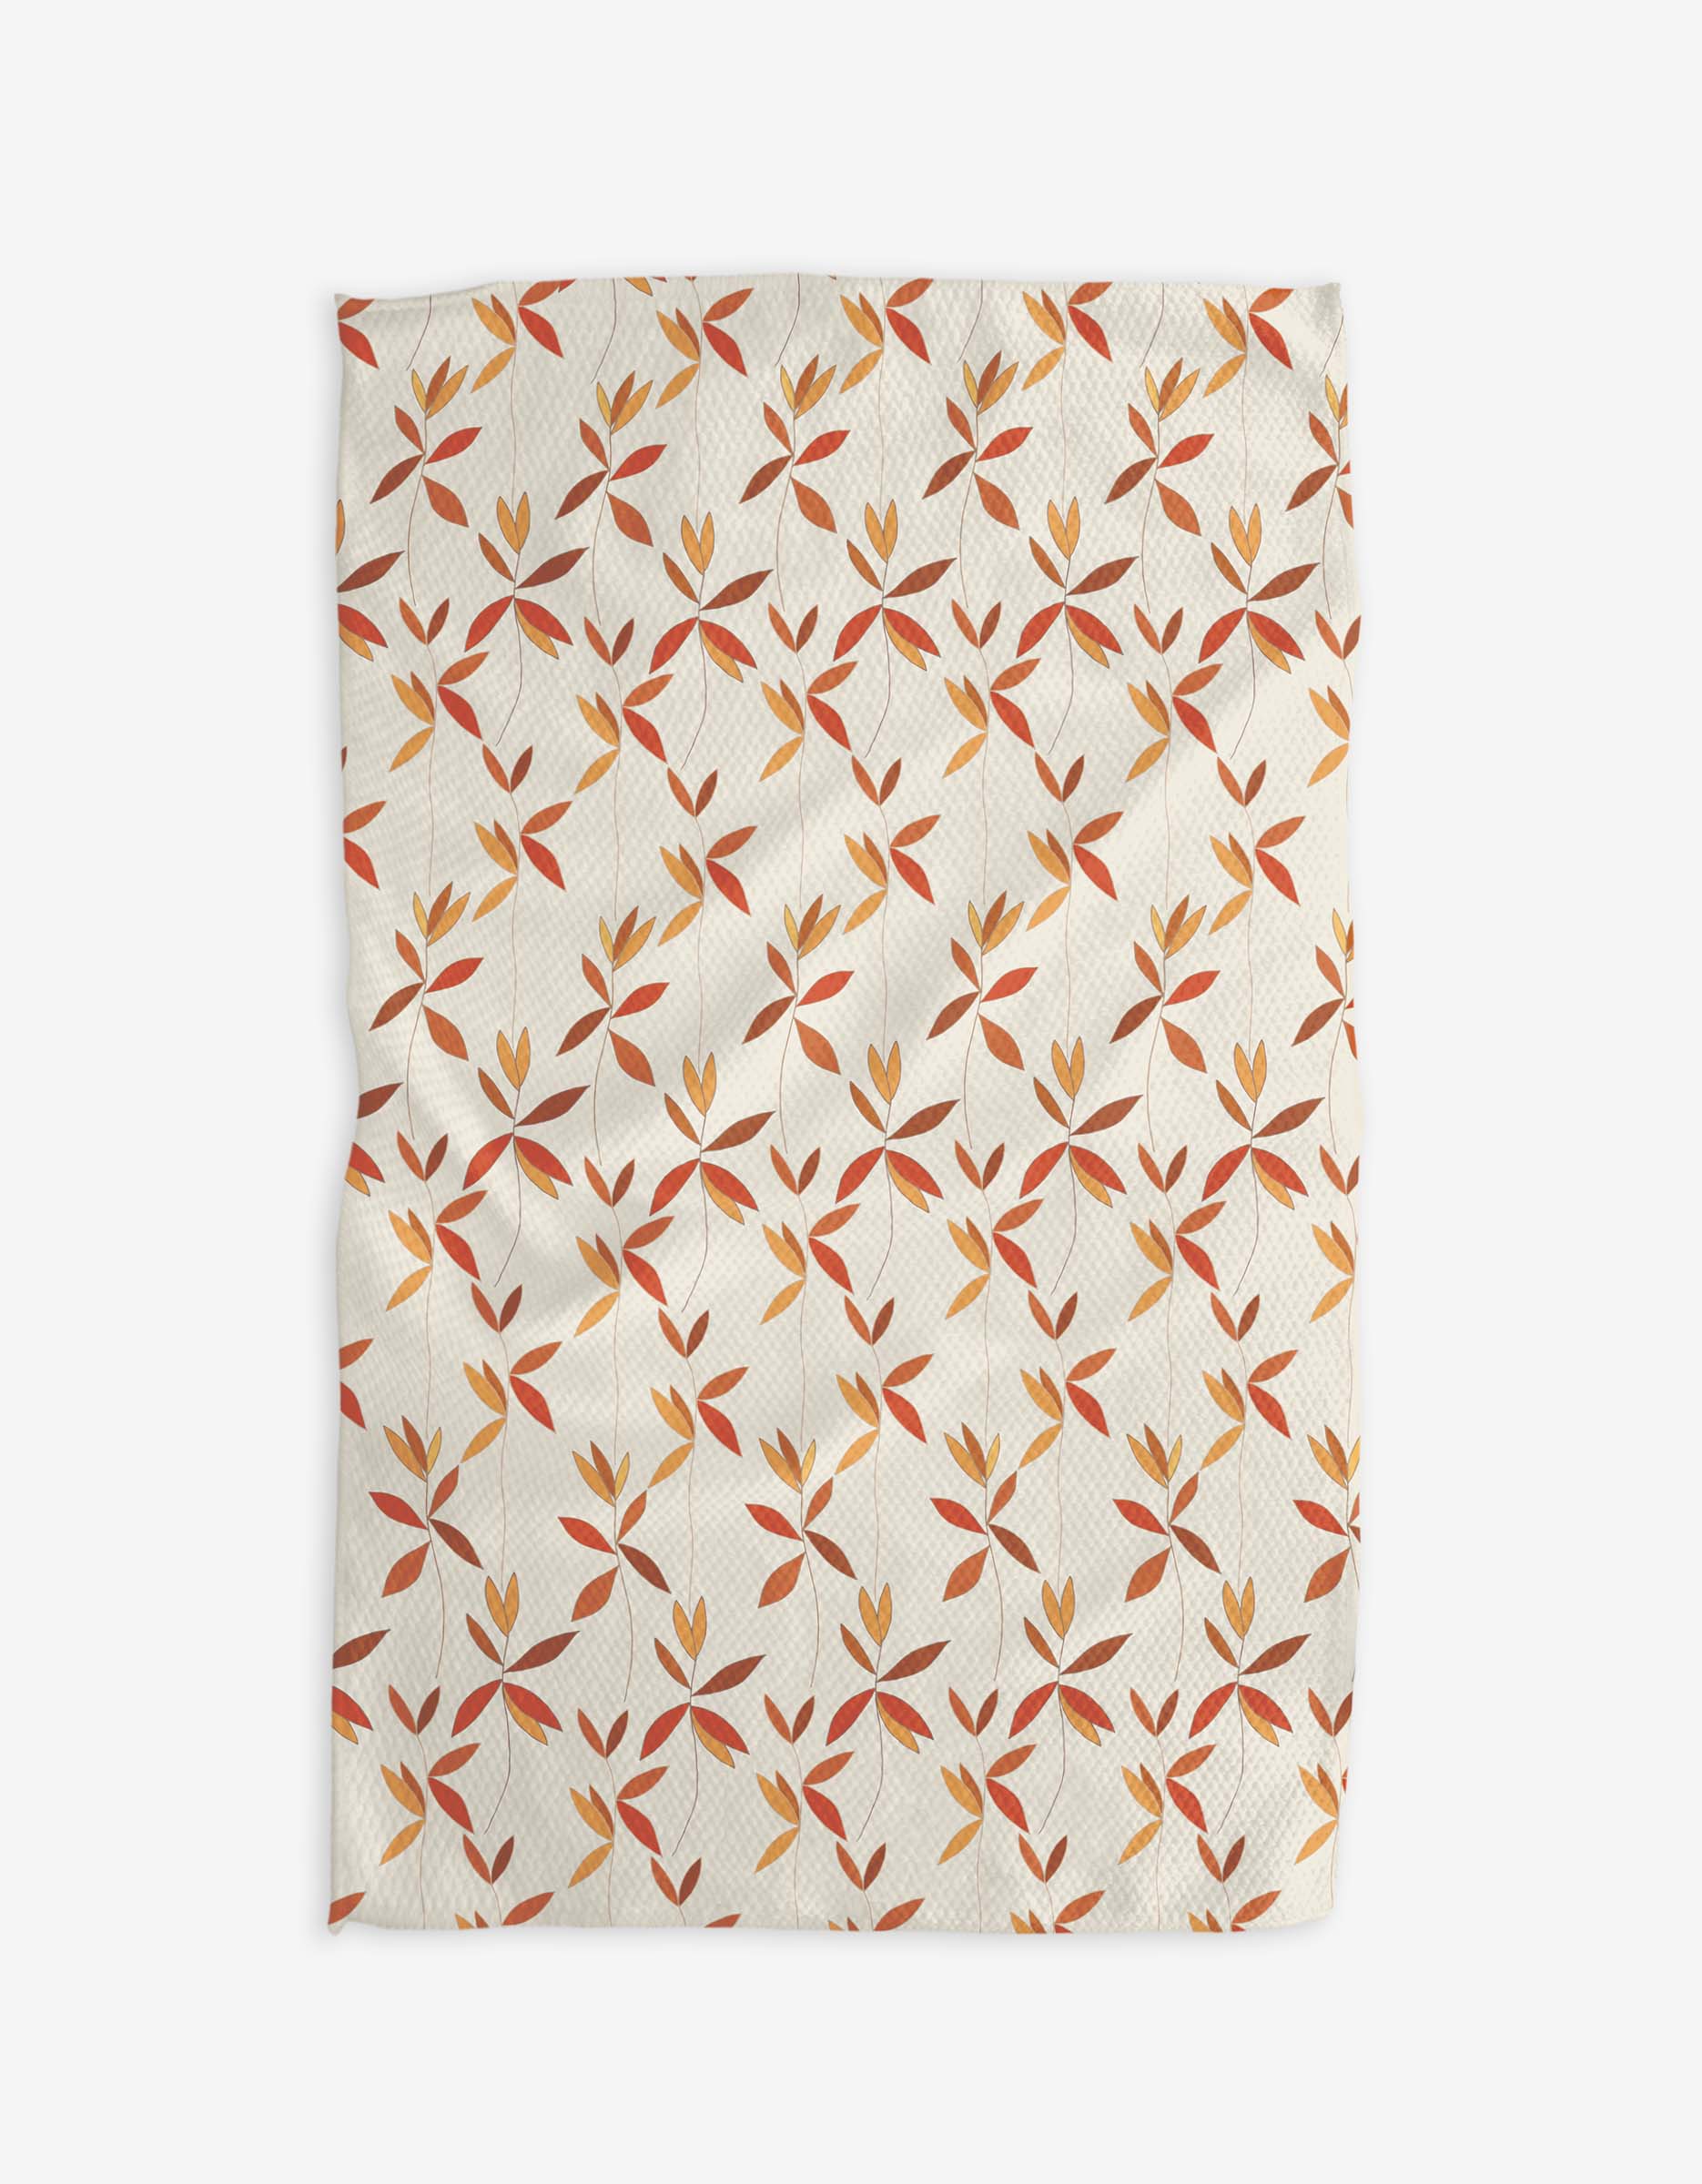 Geometry Tea Towel - Fronds at Night